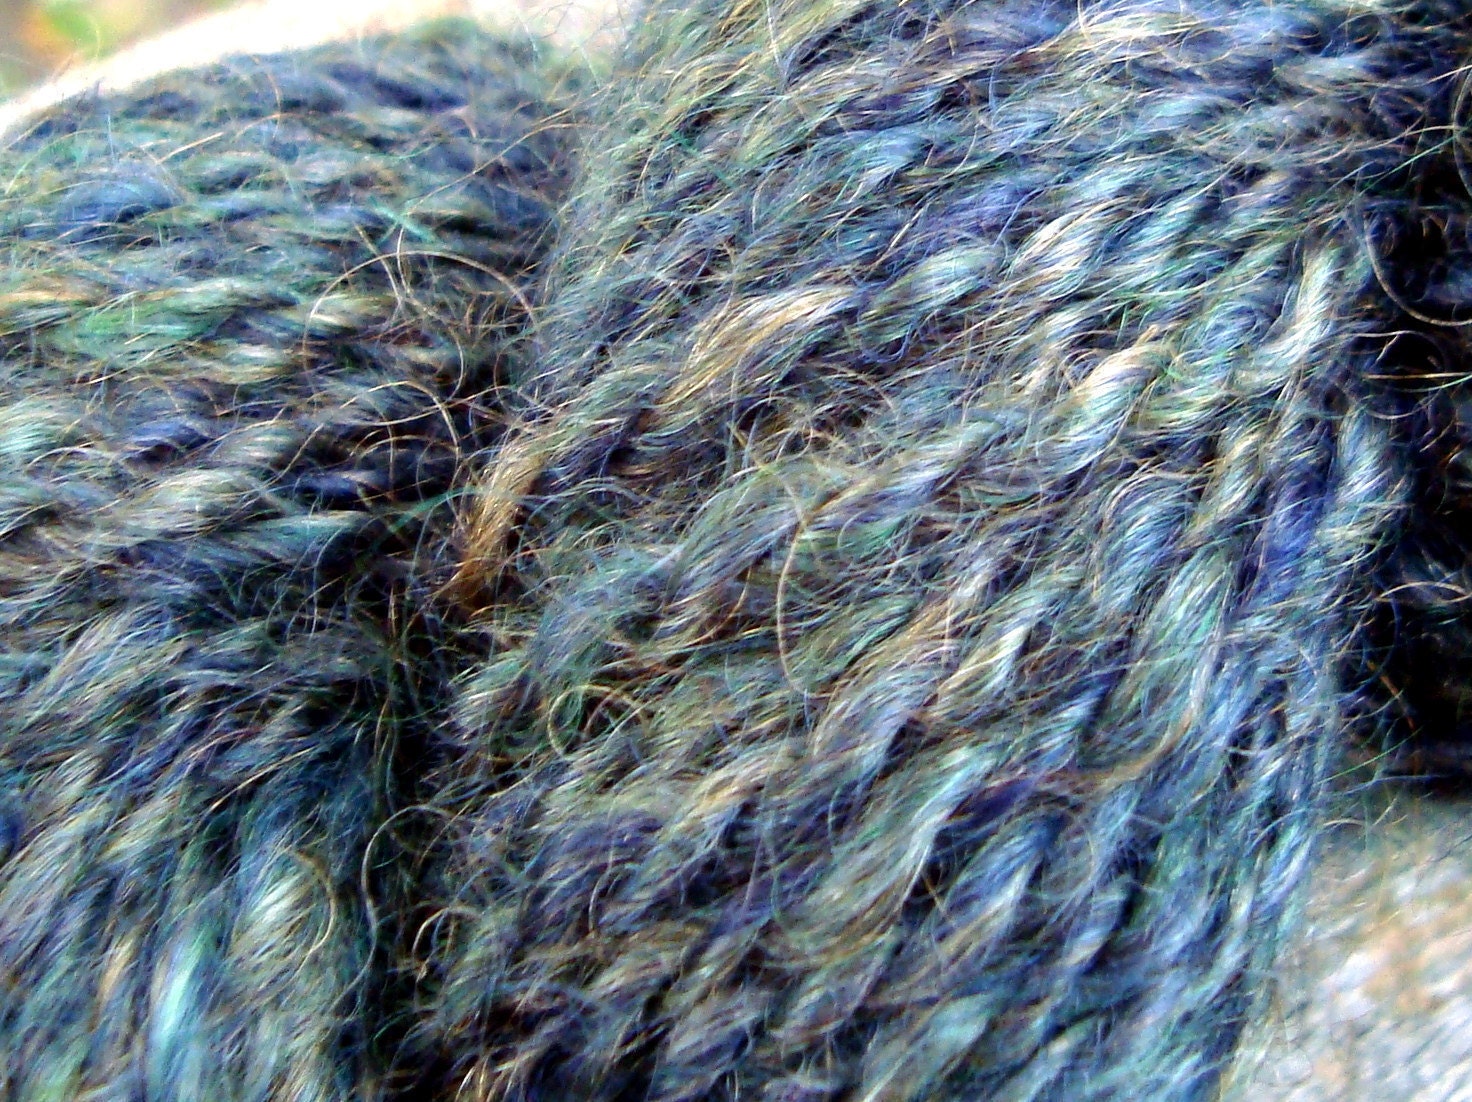 SALE Black Friday/Cyber Monday- Handspun Yarn, Wool/Mohair Blend: Blue-Green - KnitMomWi